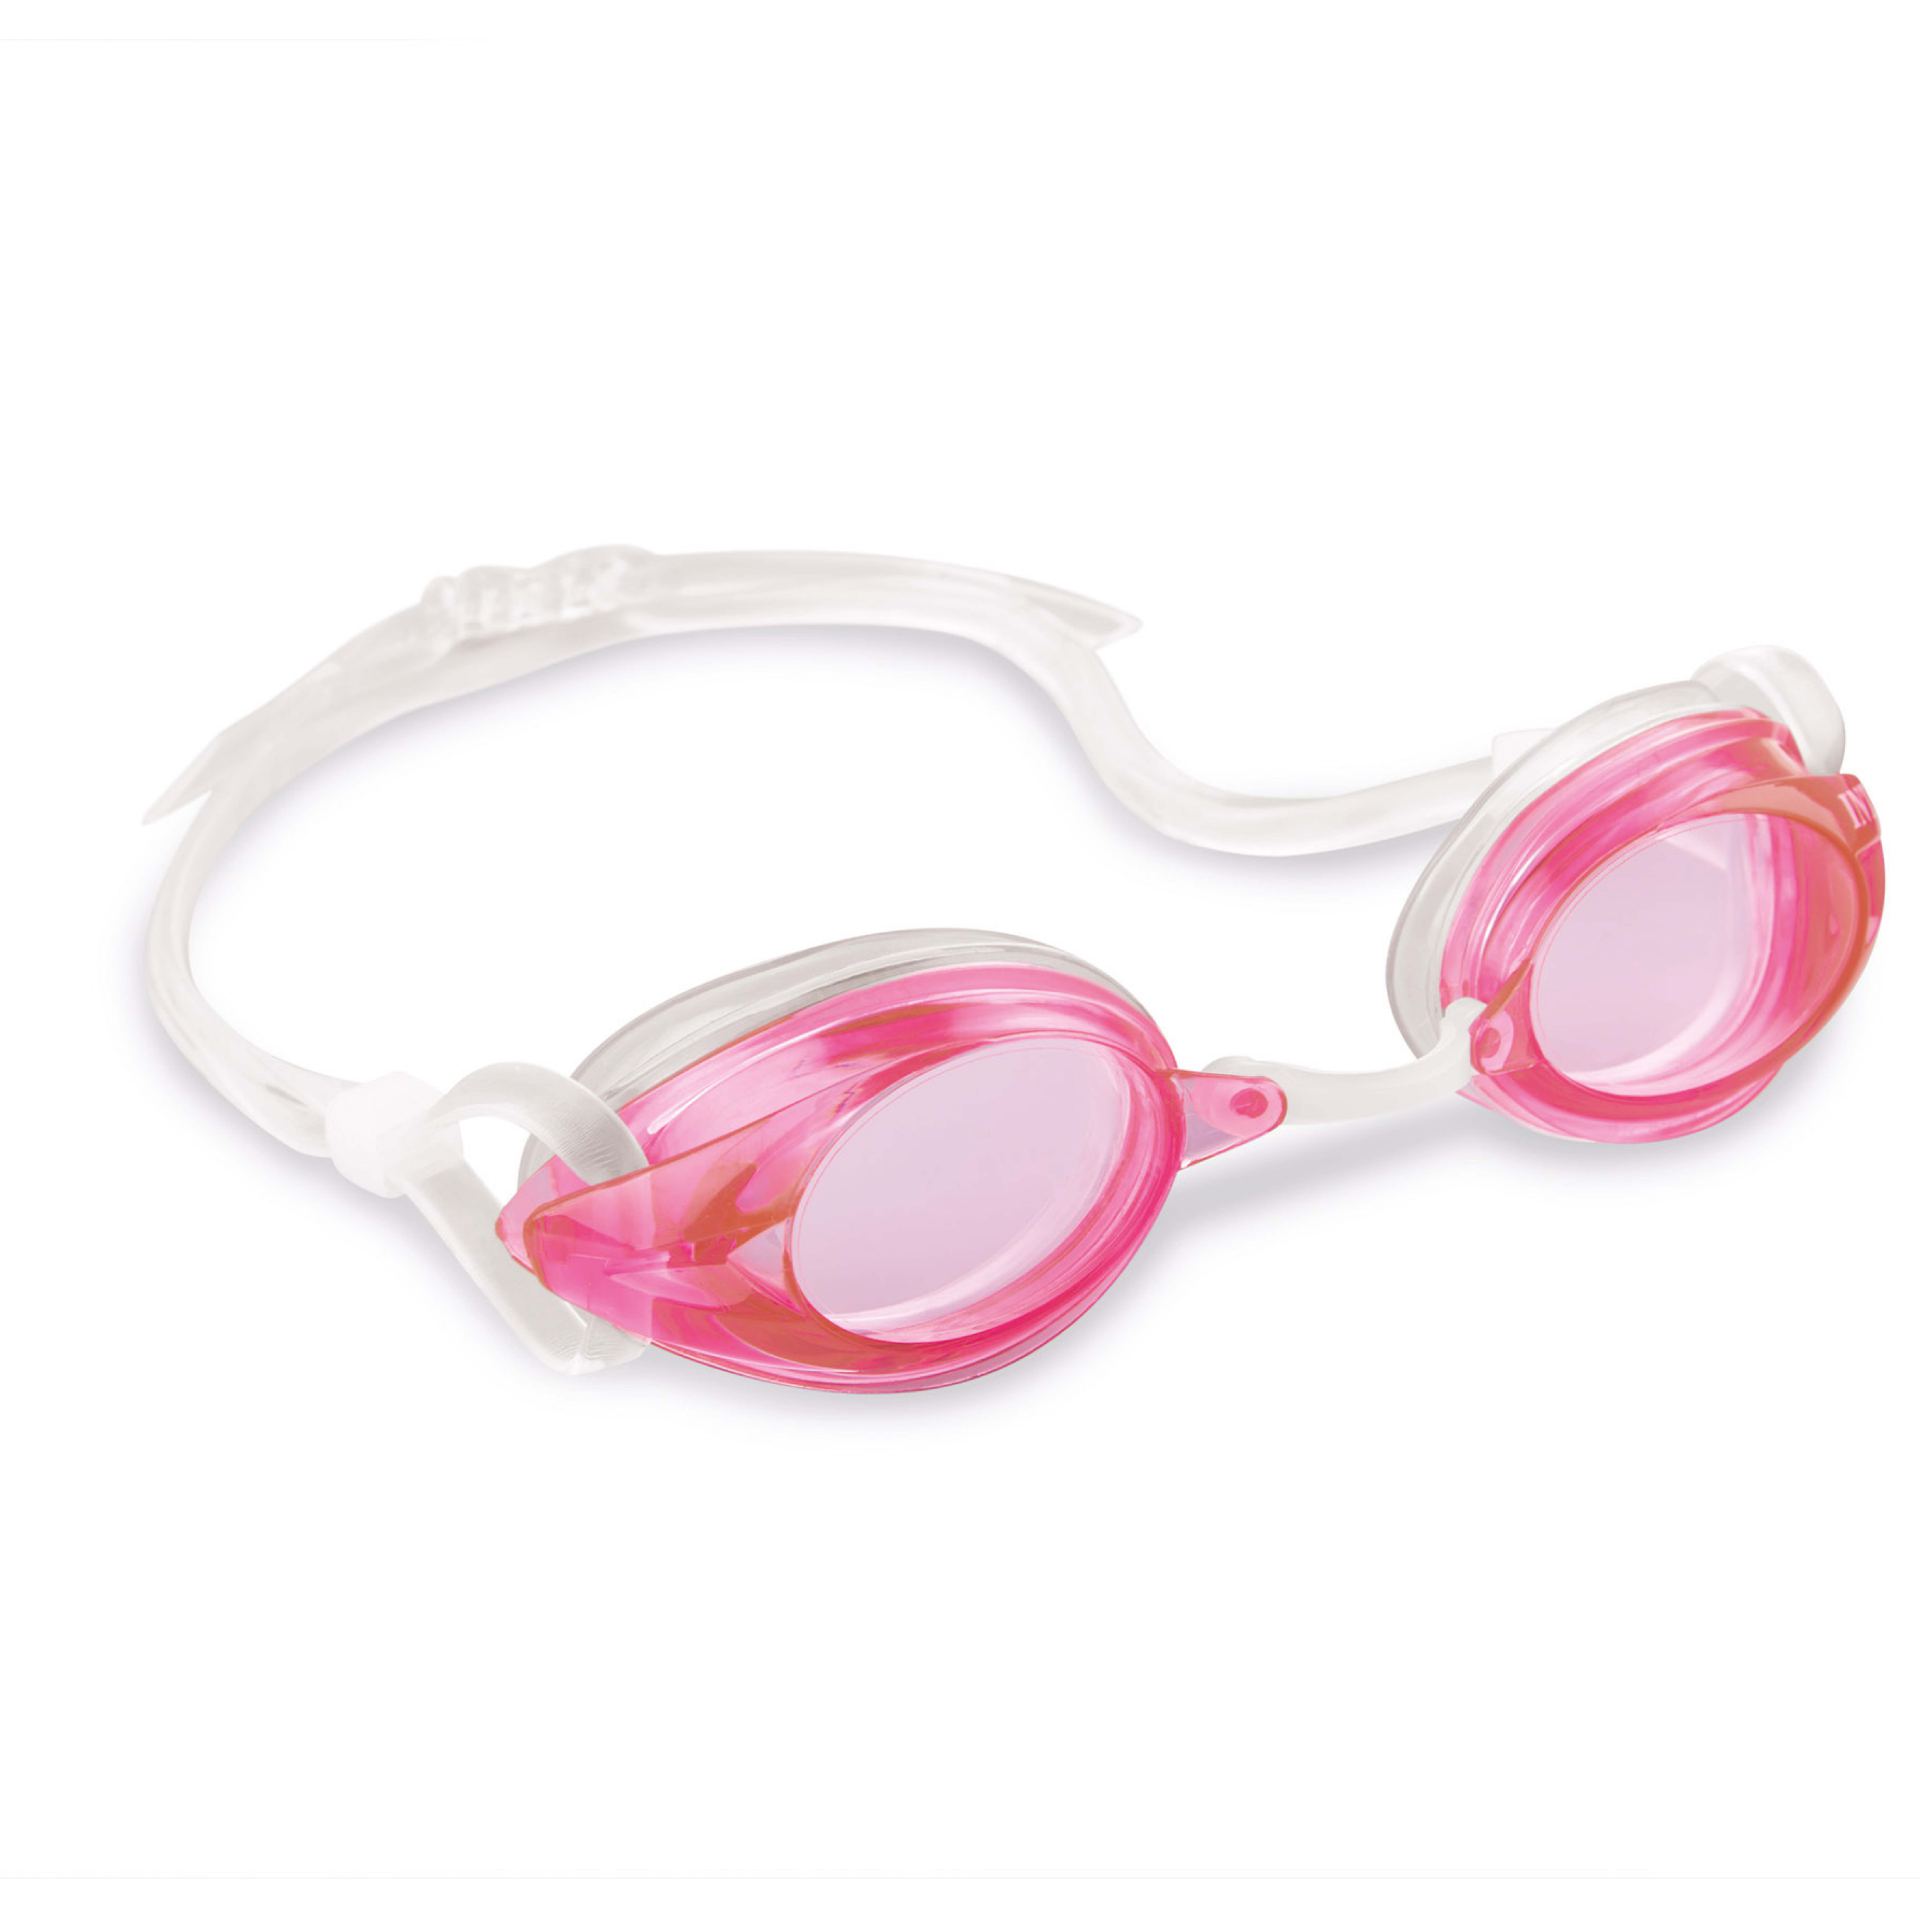 Intex sport relay goggles - Roze